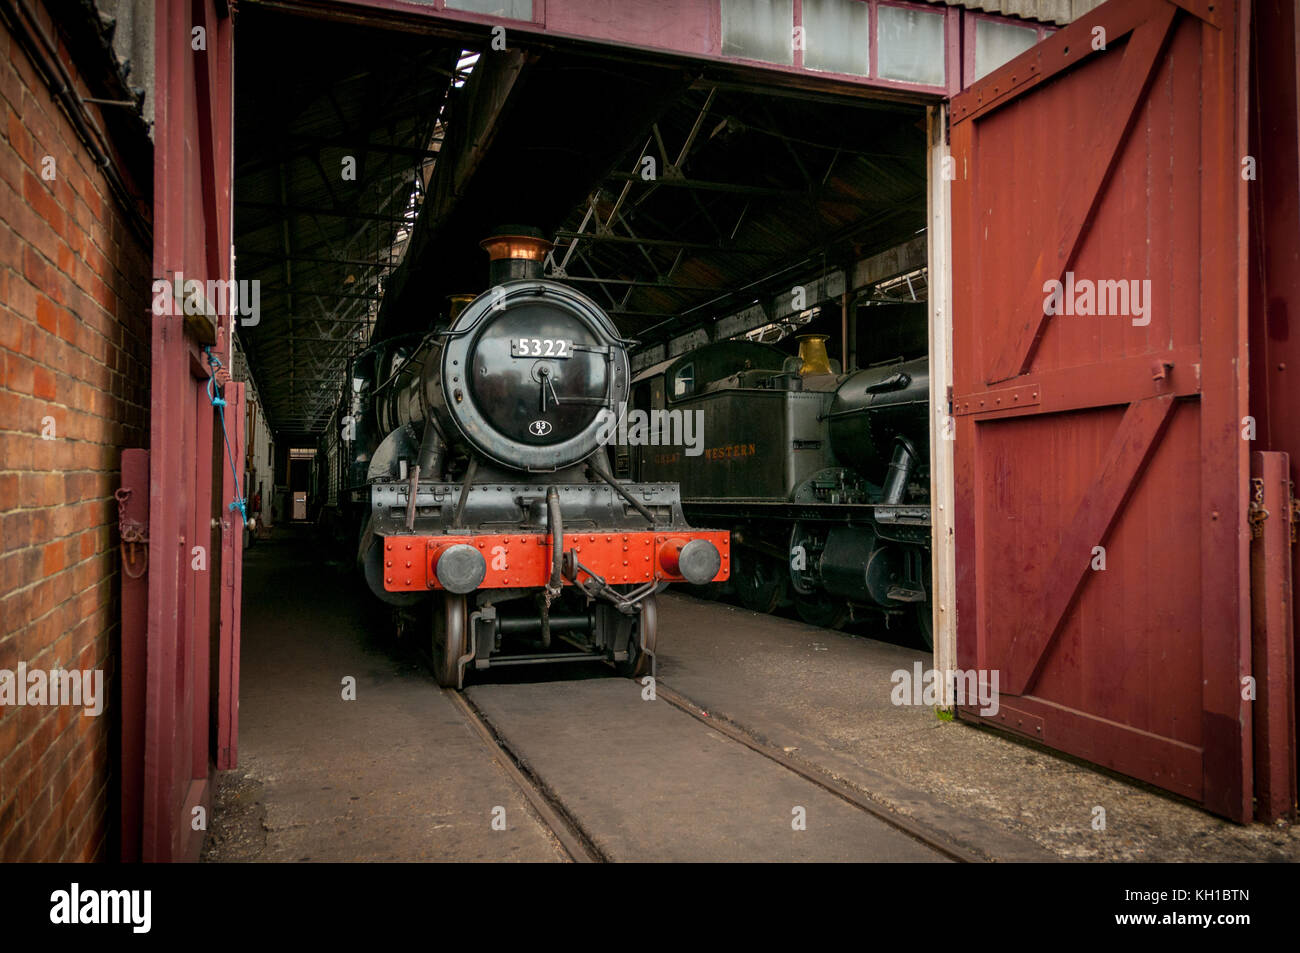 Great Western Railway locomotive no 5322, Didcot Railway Centre, United Kingdom Stock Photo